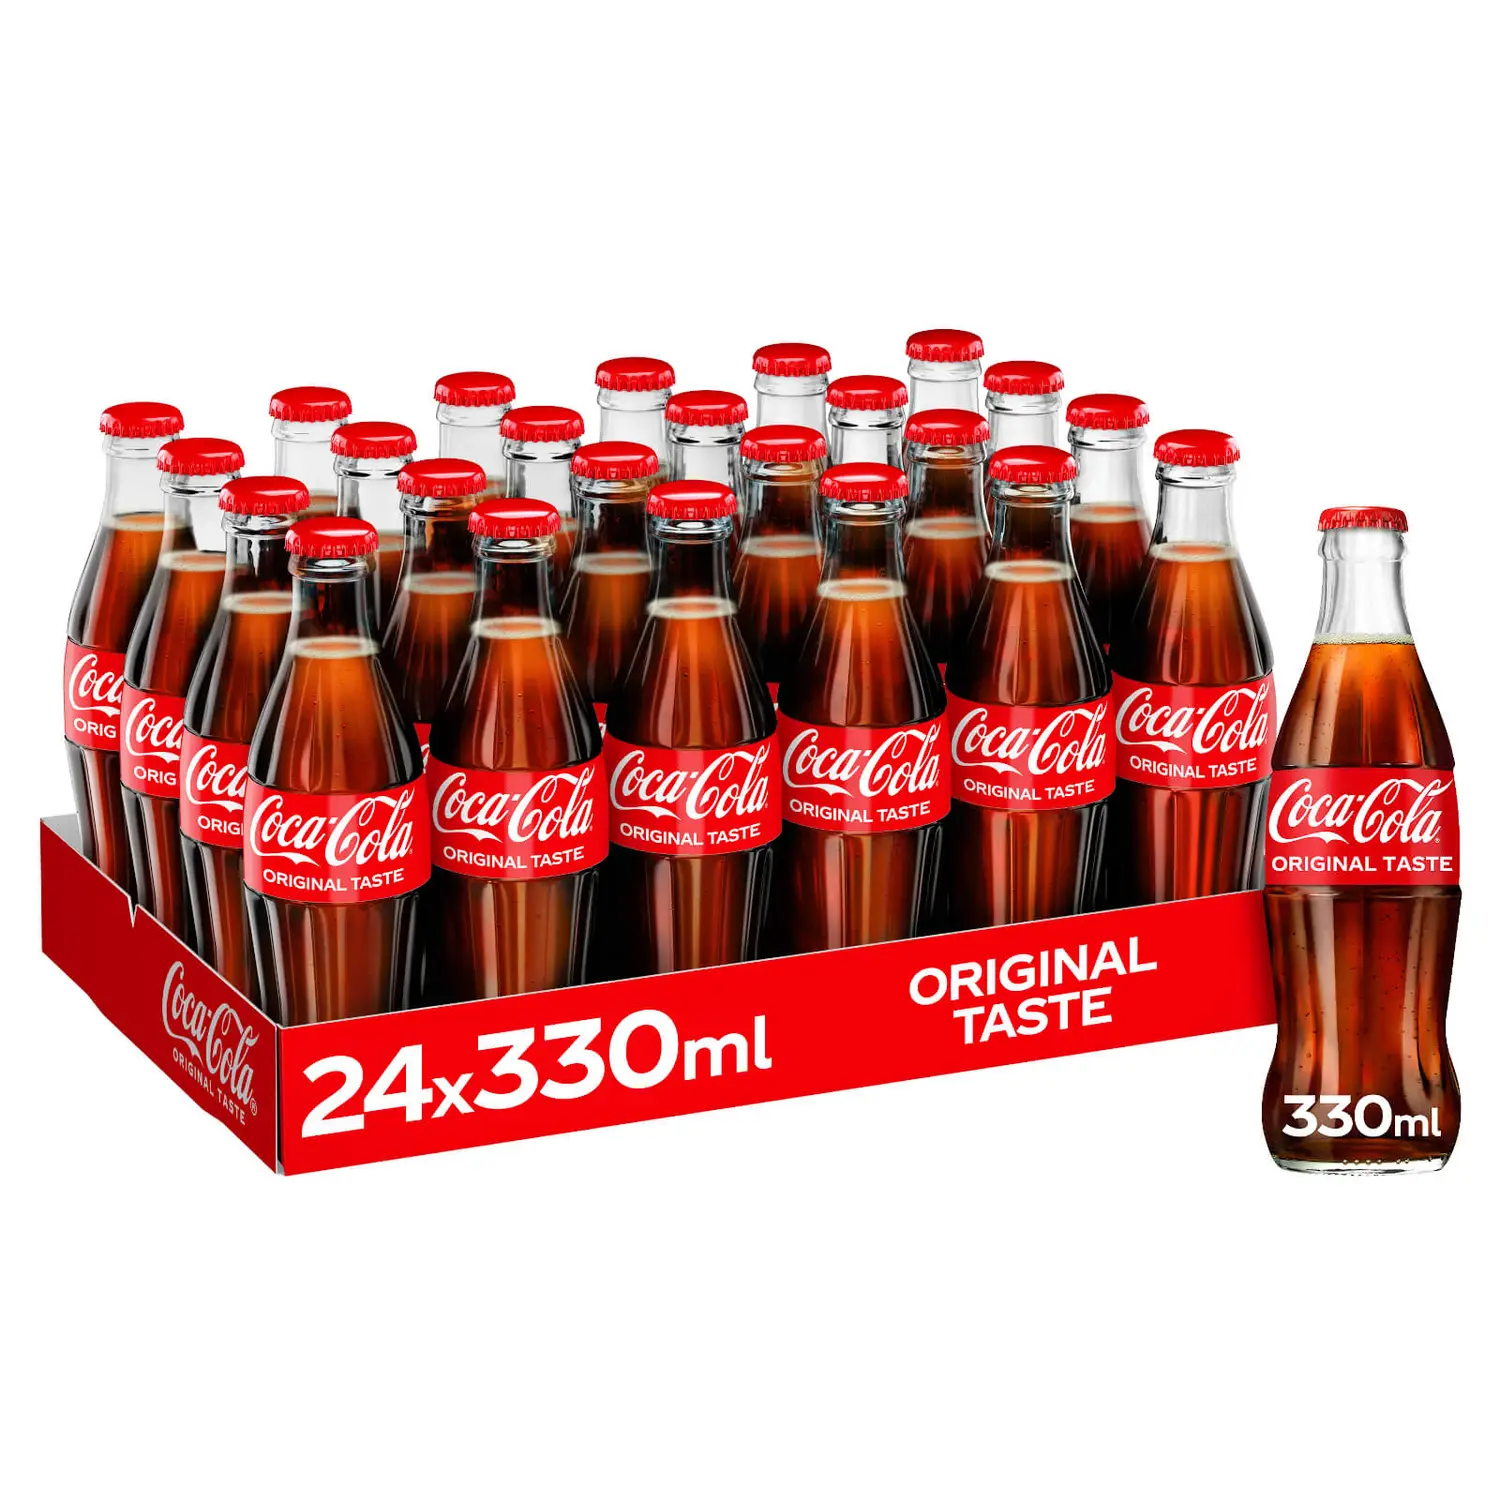 Coca-Cola bottles on display 